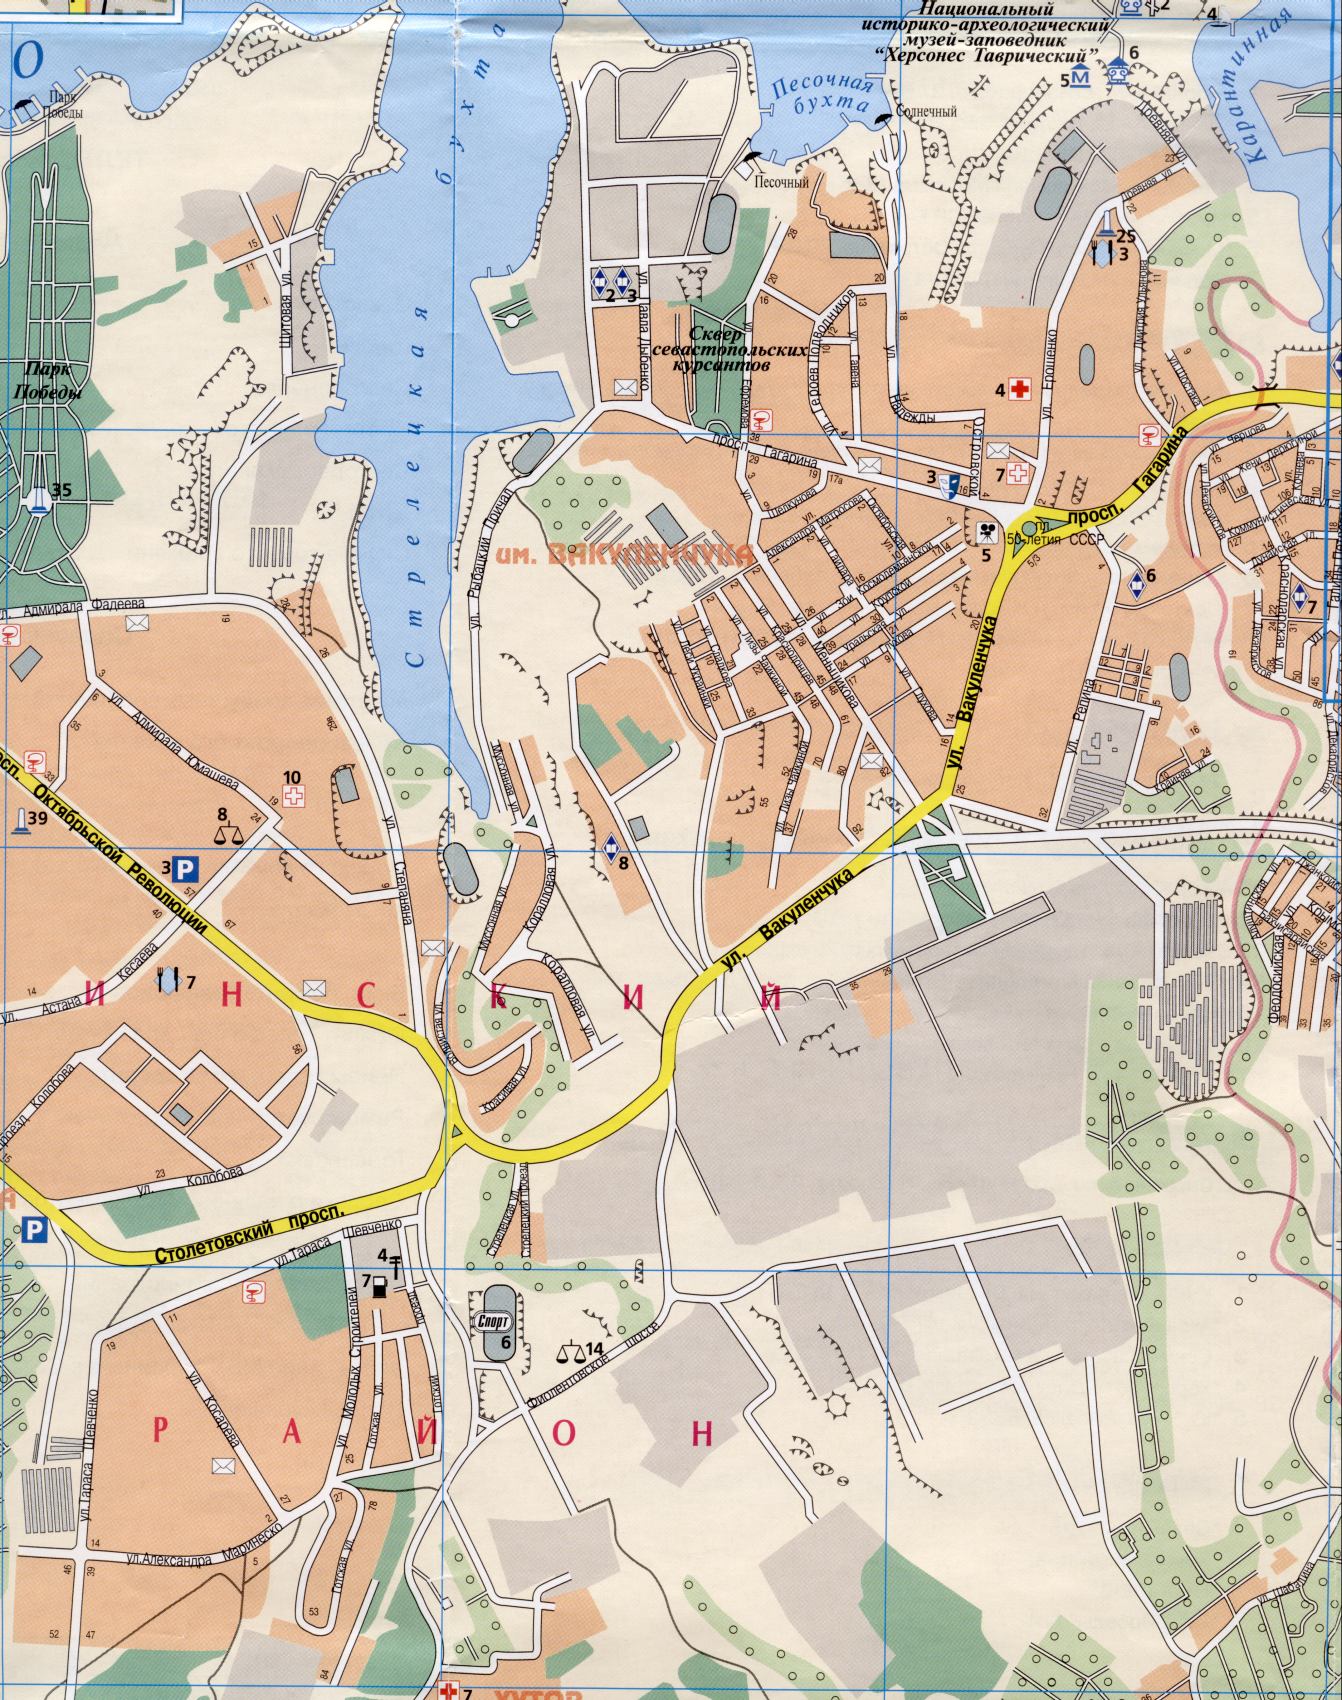 Map of Sevastopol detailed (map scheme Sevastopol 1cm = 200m)